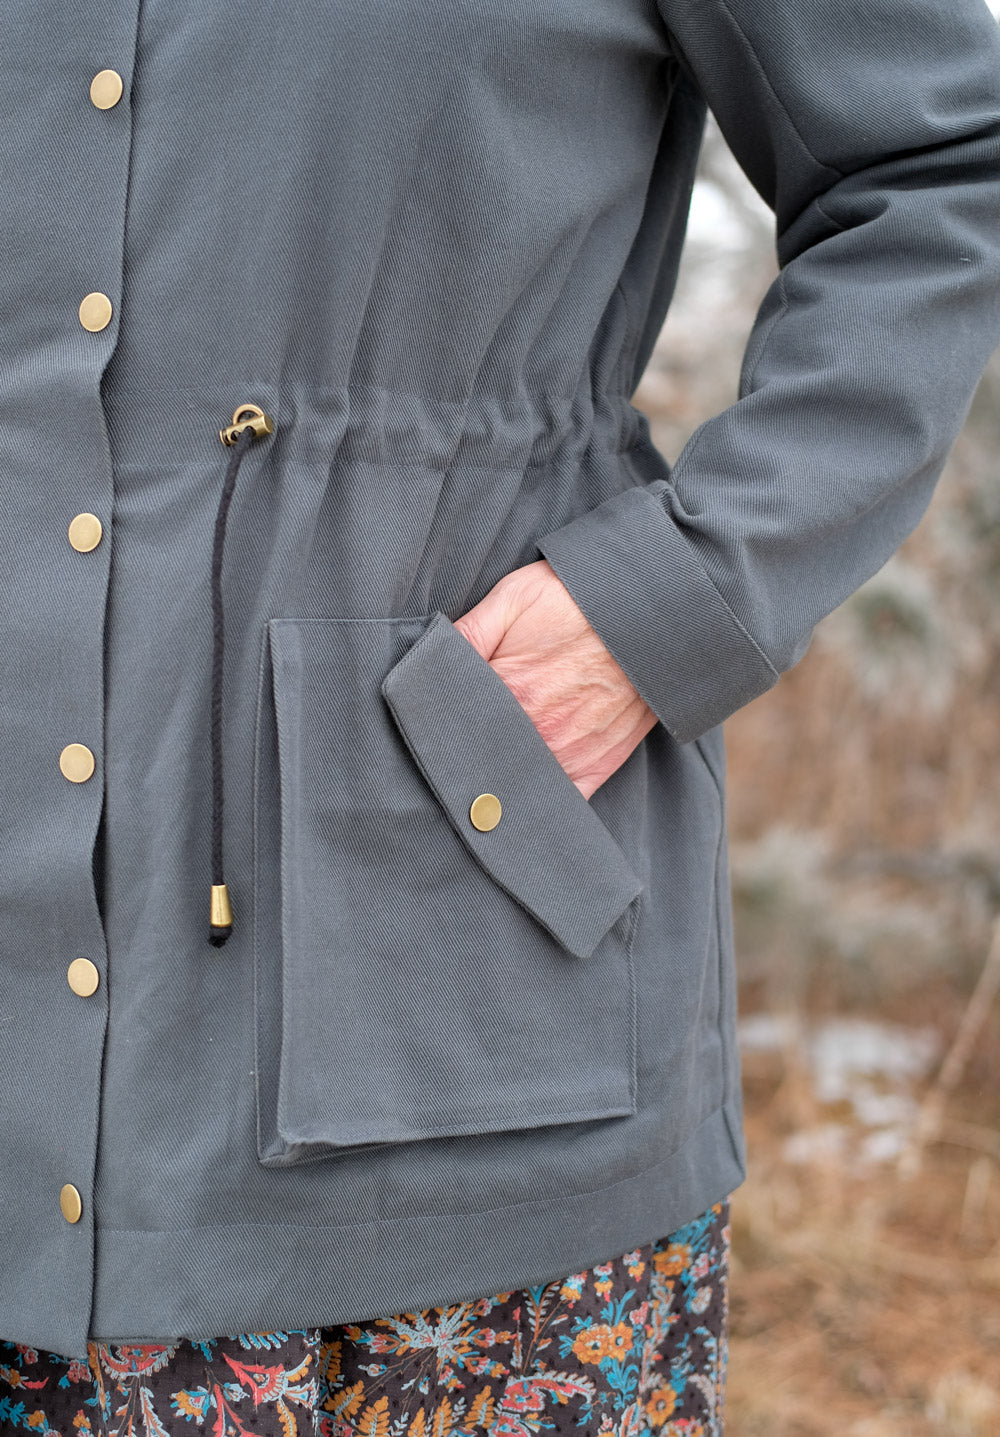 Pocket Detail of the Kelly Anorak Jacket